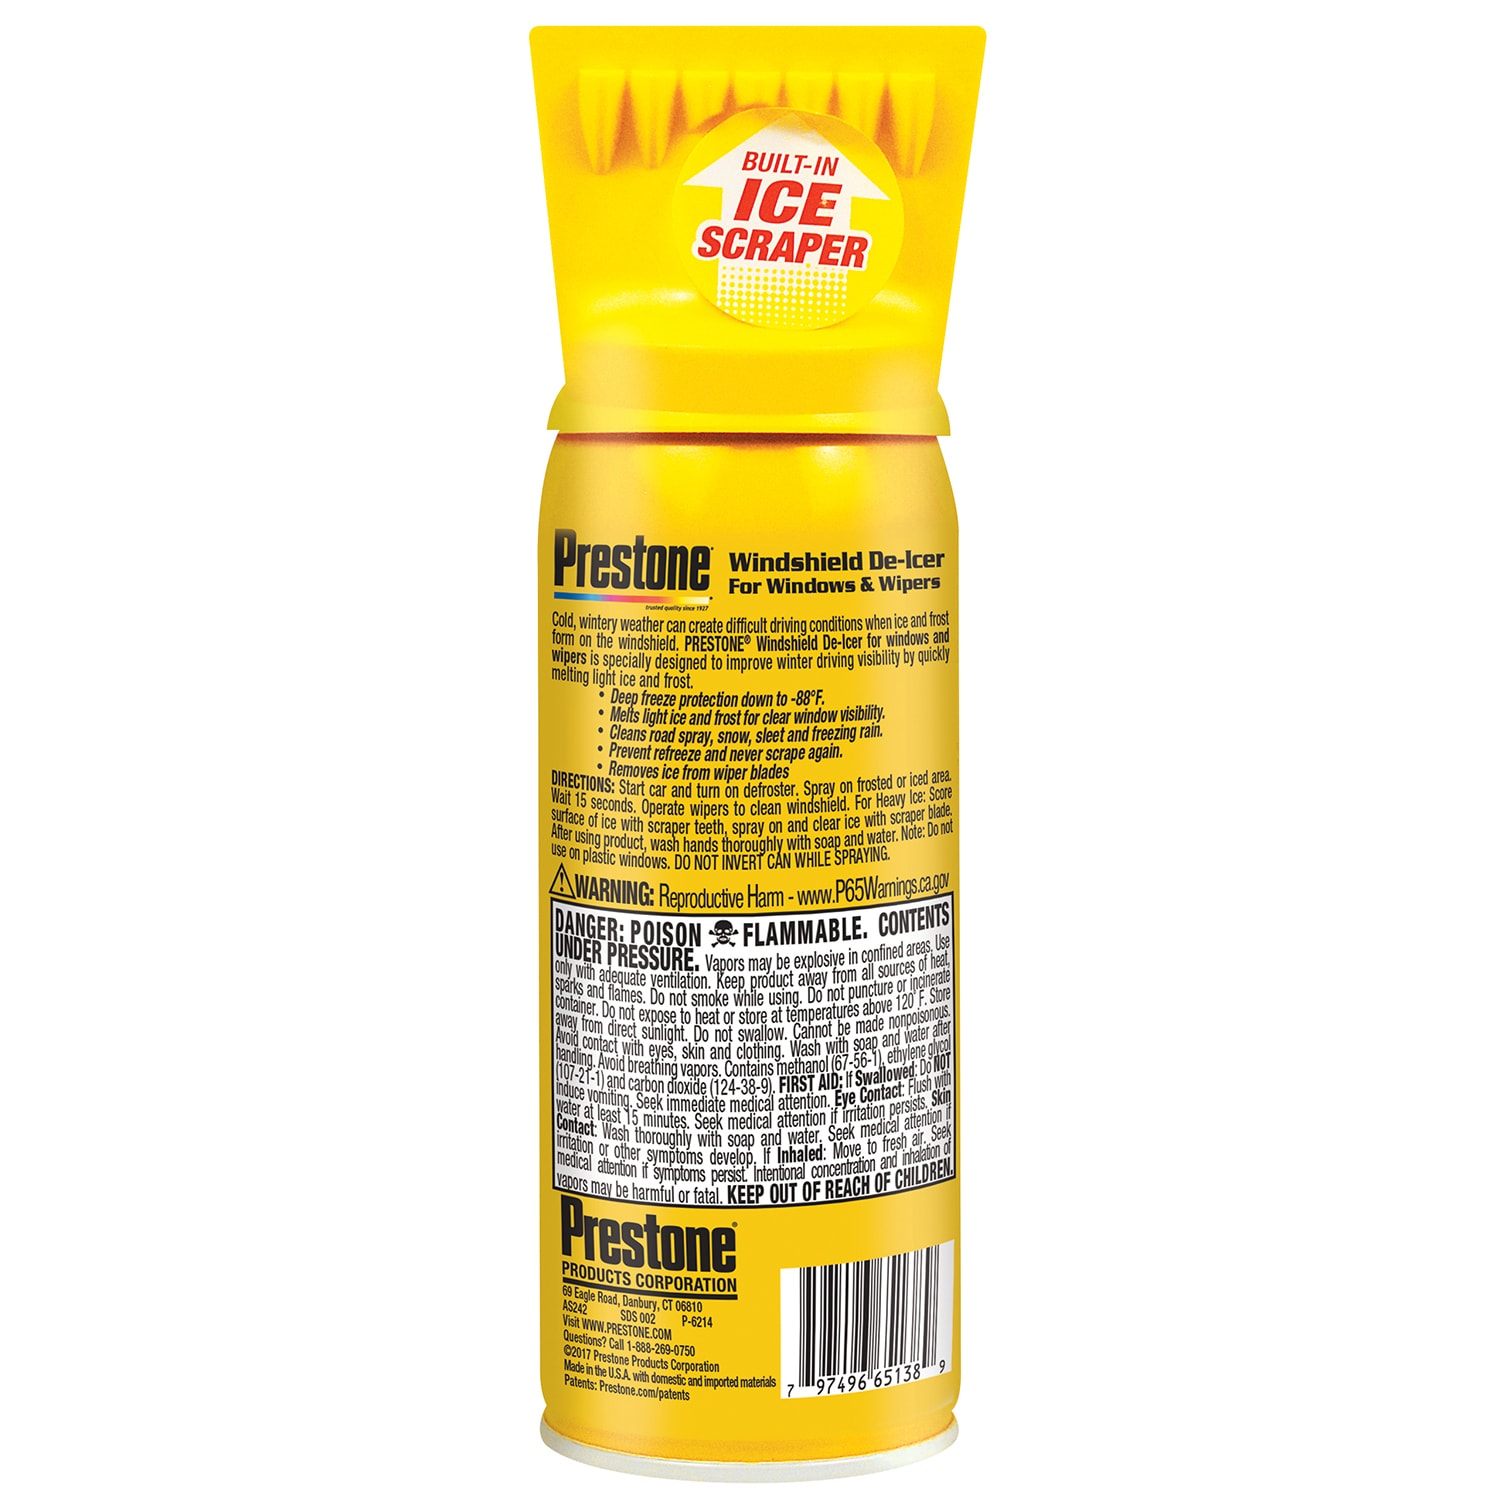 Prestone 11 oz. Spray-On De-Icer - Prevents Re-Freezing, -50F